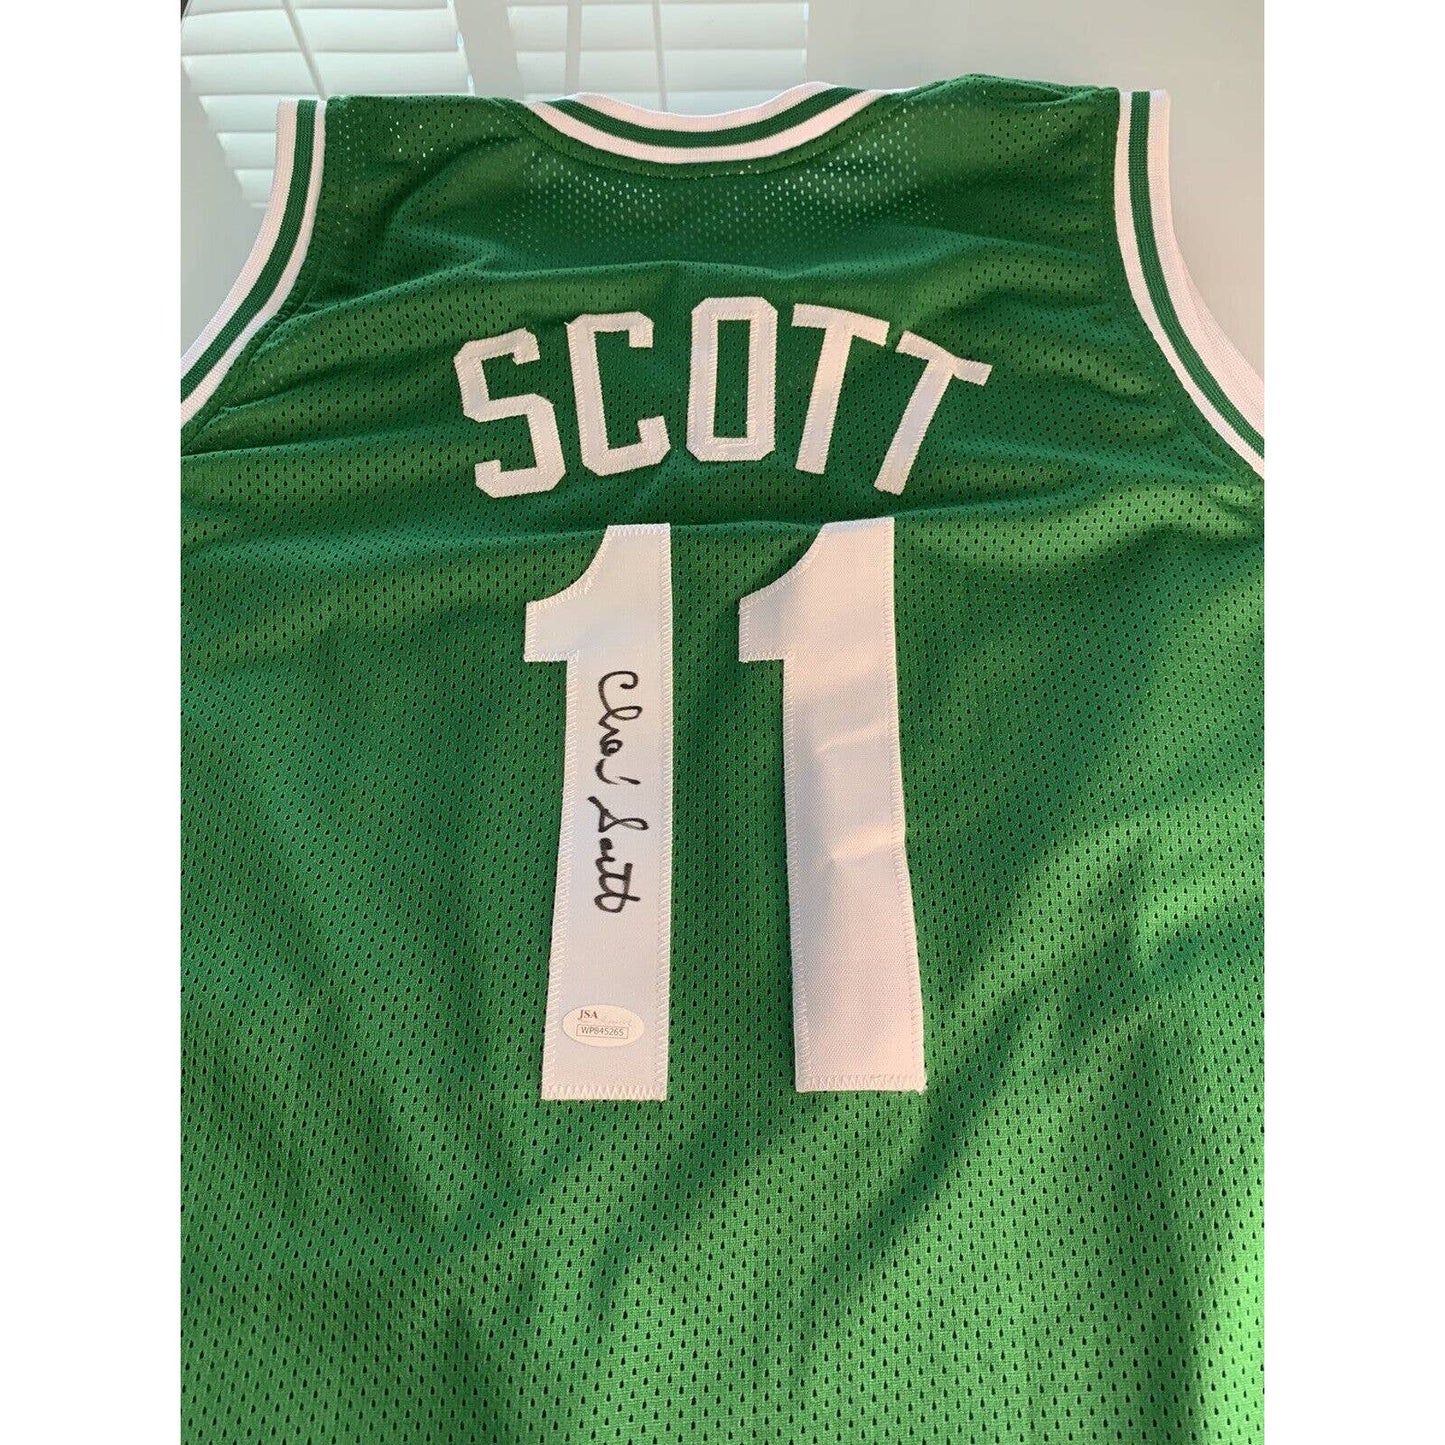 Charlie Scott Autographed/Signed Jersey JSA Sticker Boston Celtics - TreasuresEvolved